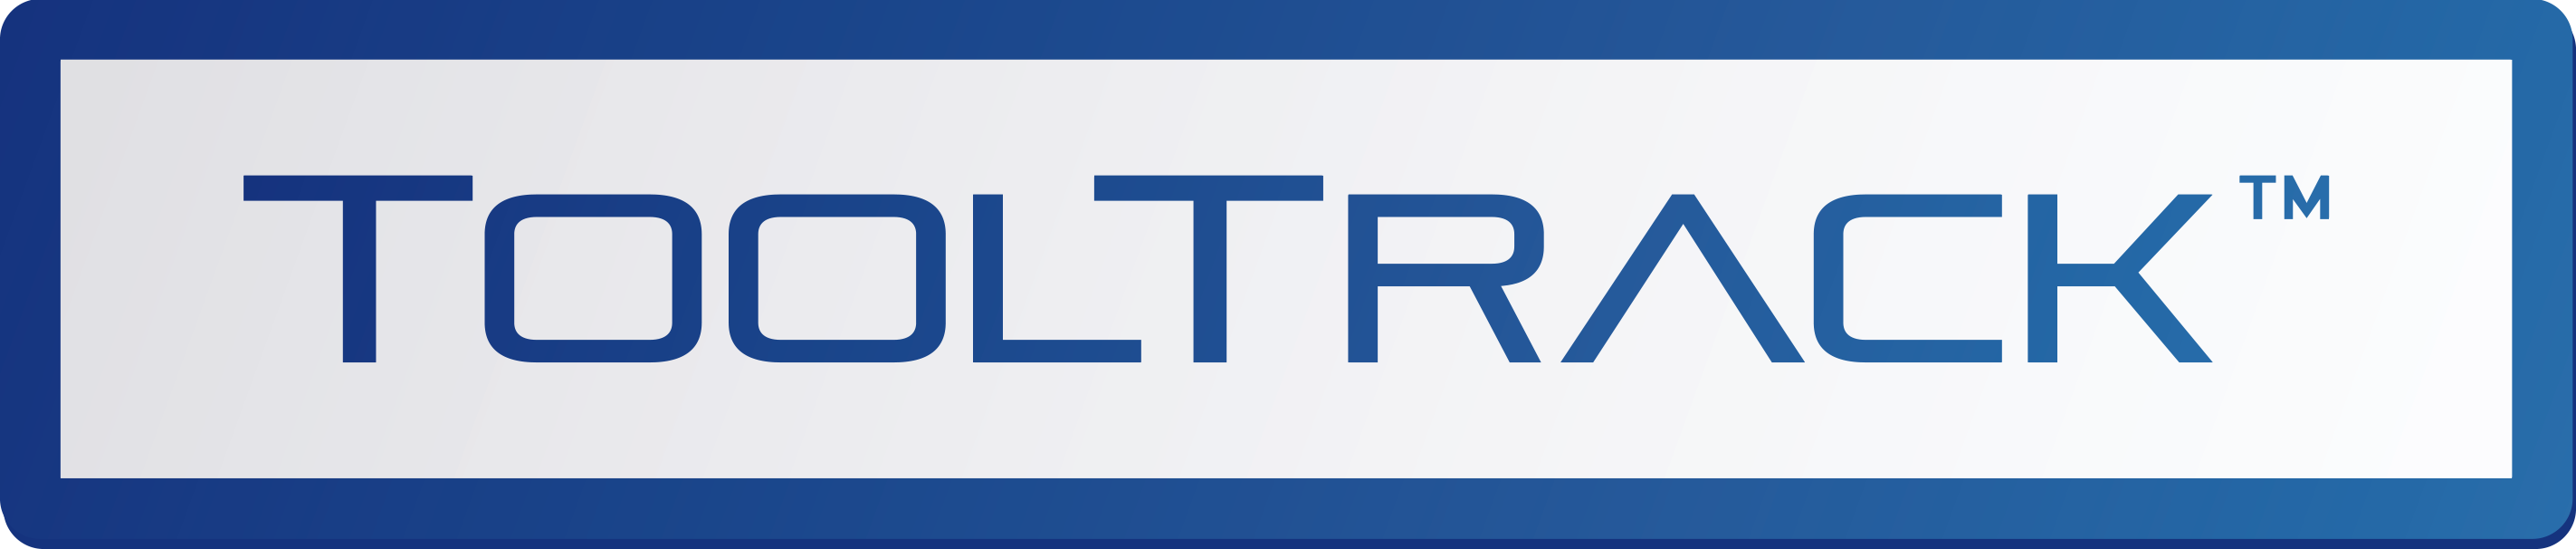 ToolTrack Logo